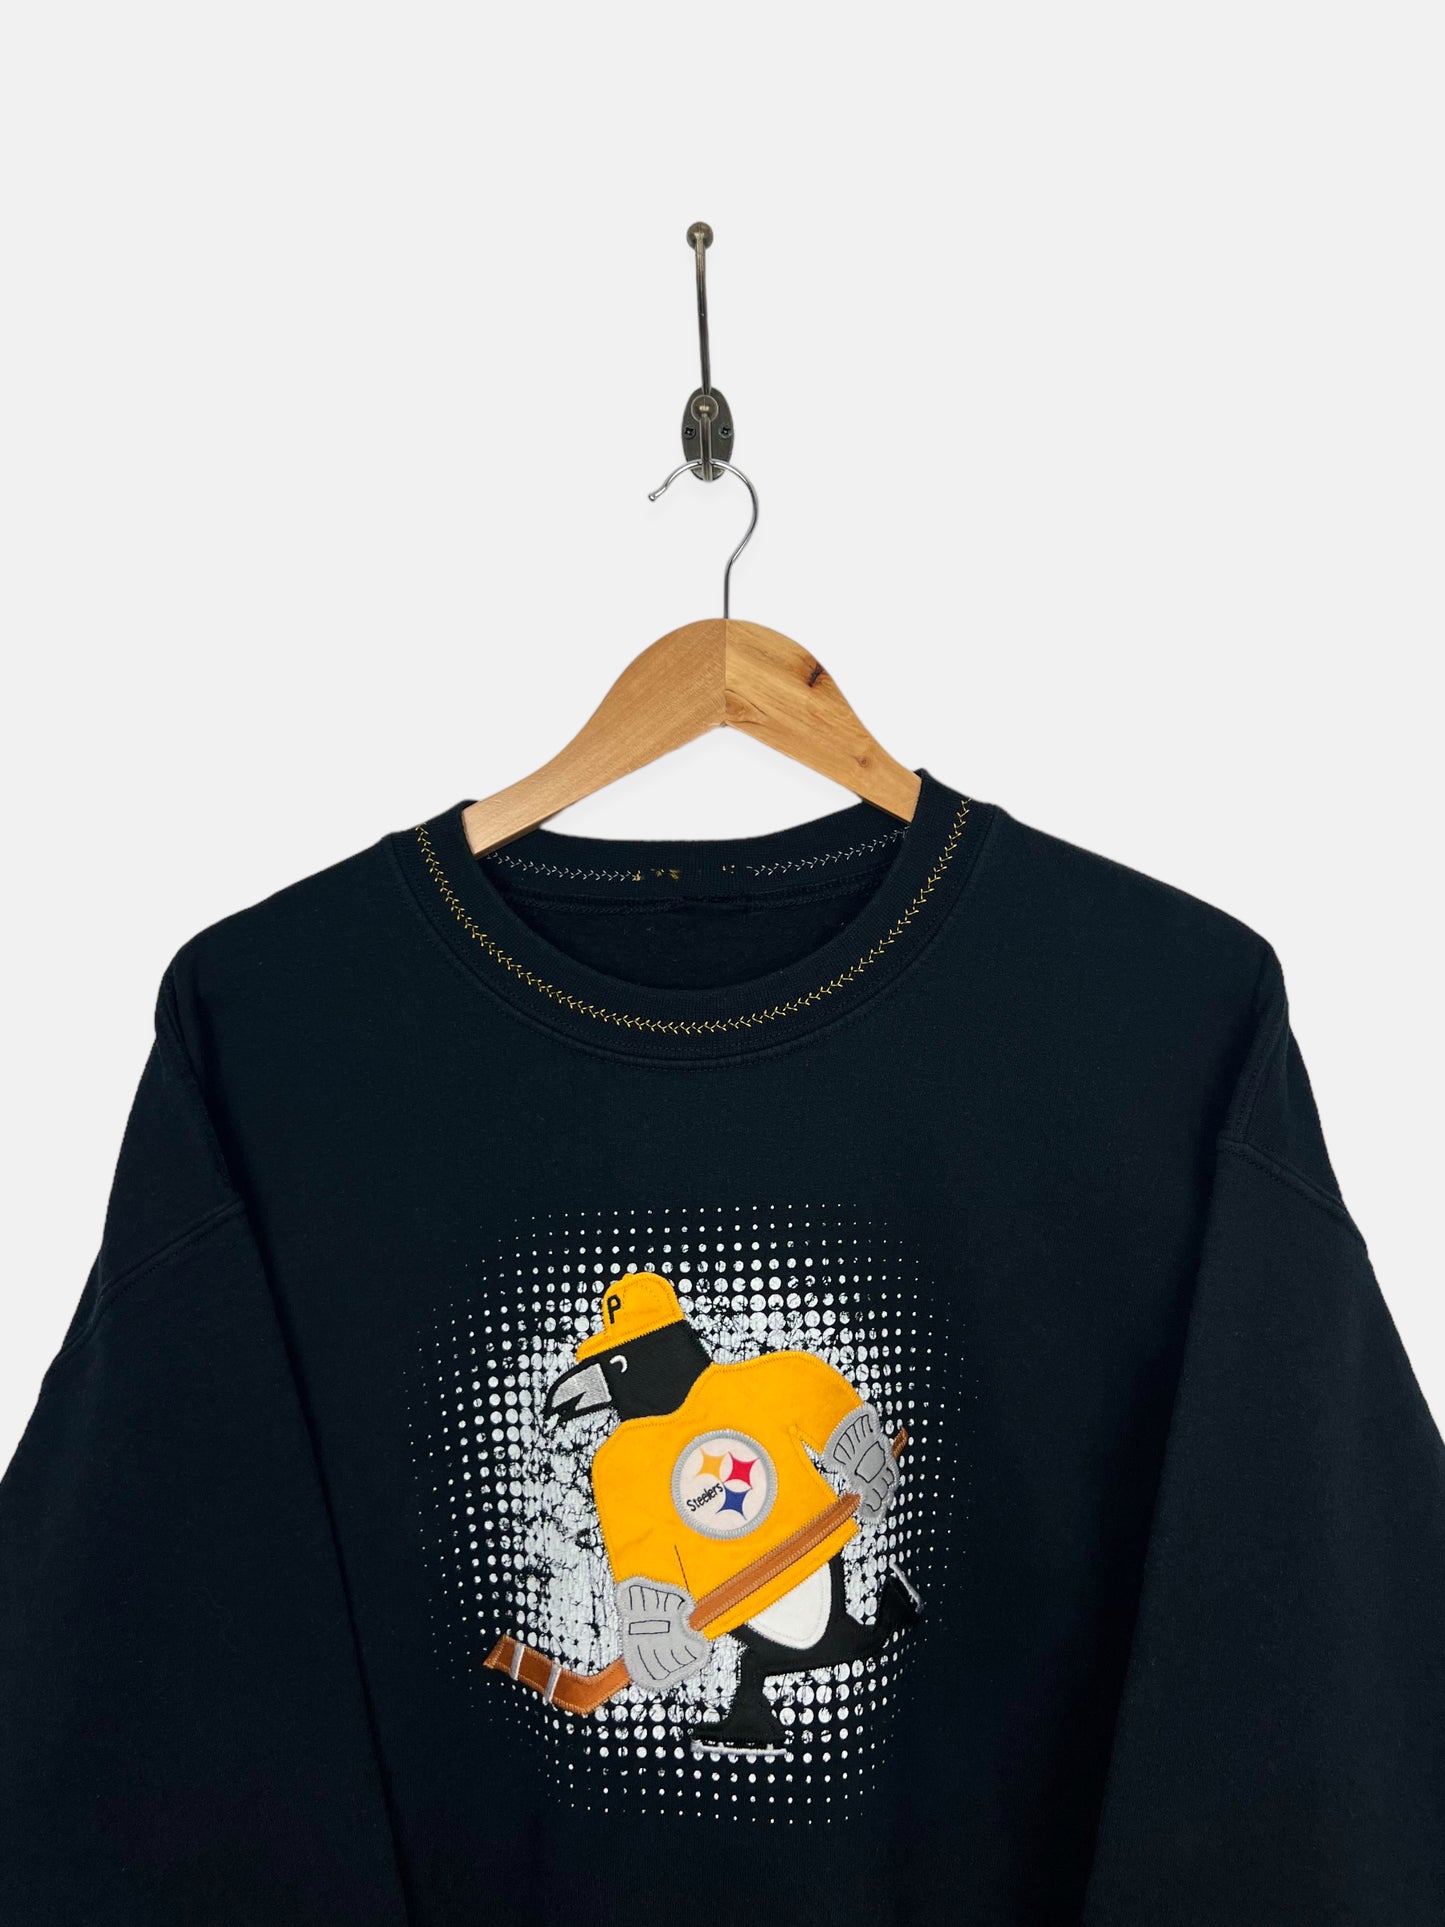 90's Pittsburgh Steelers Embroidered Vintage Sweatshirt Size 12